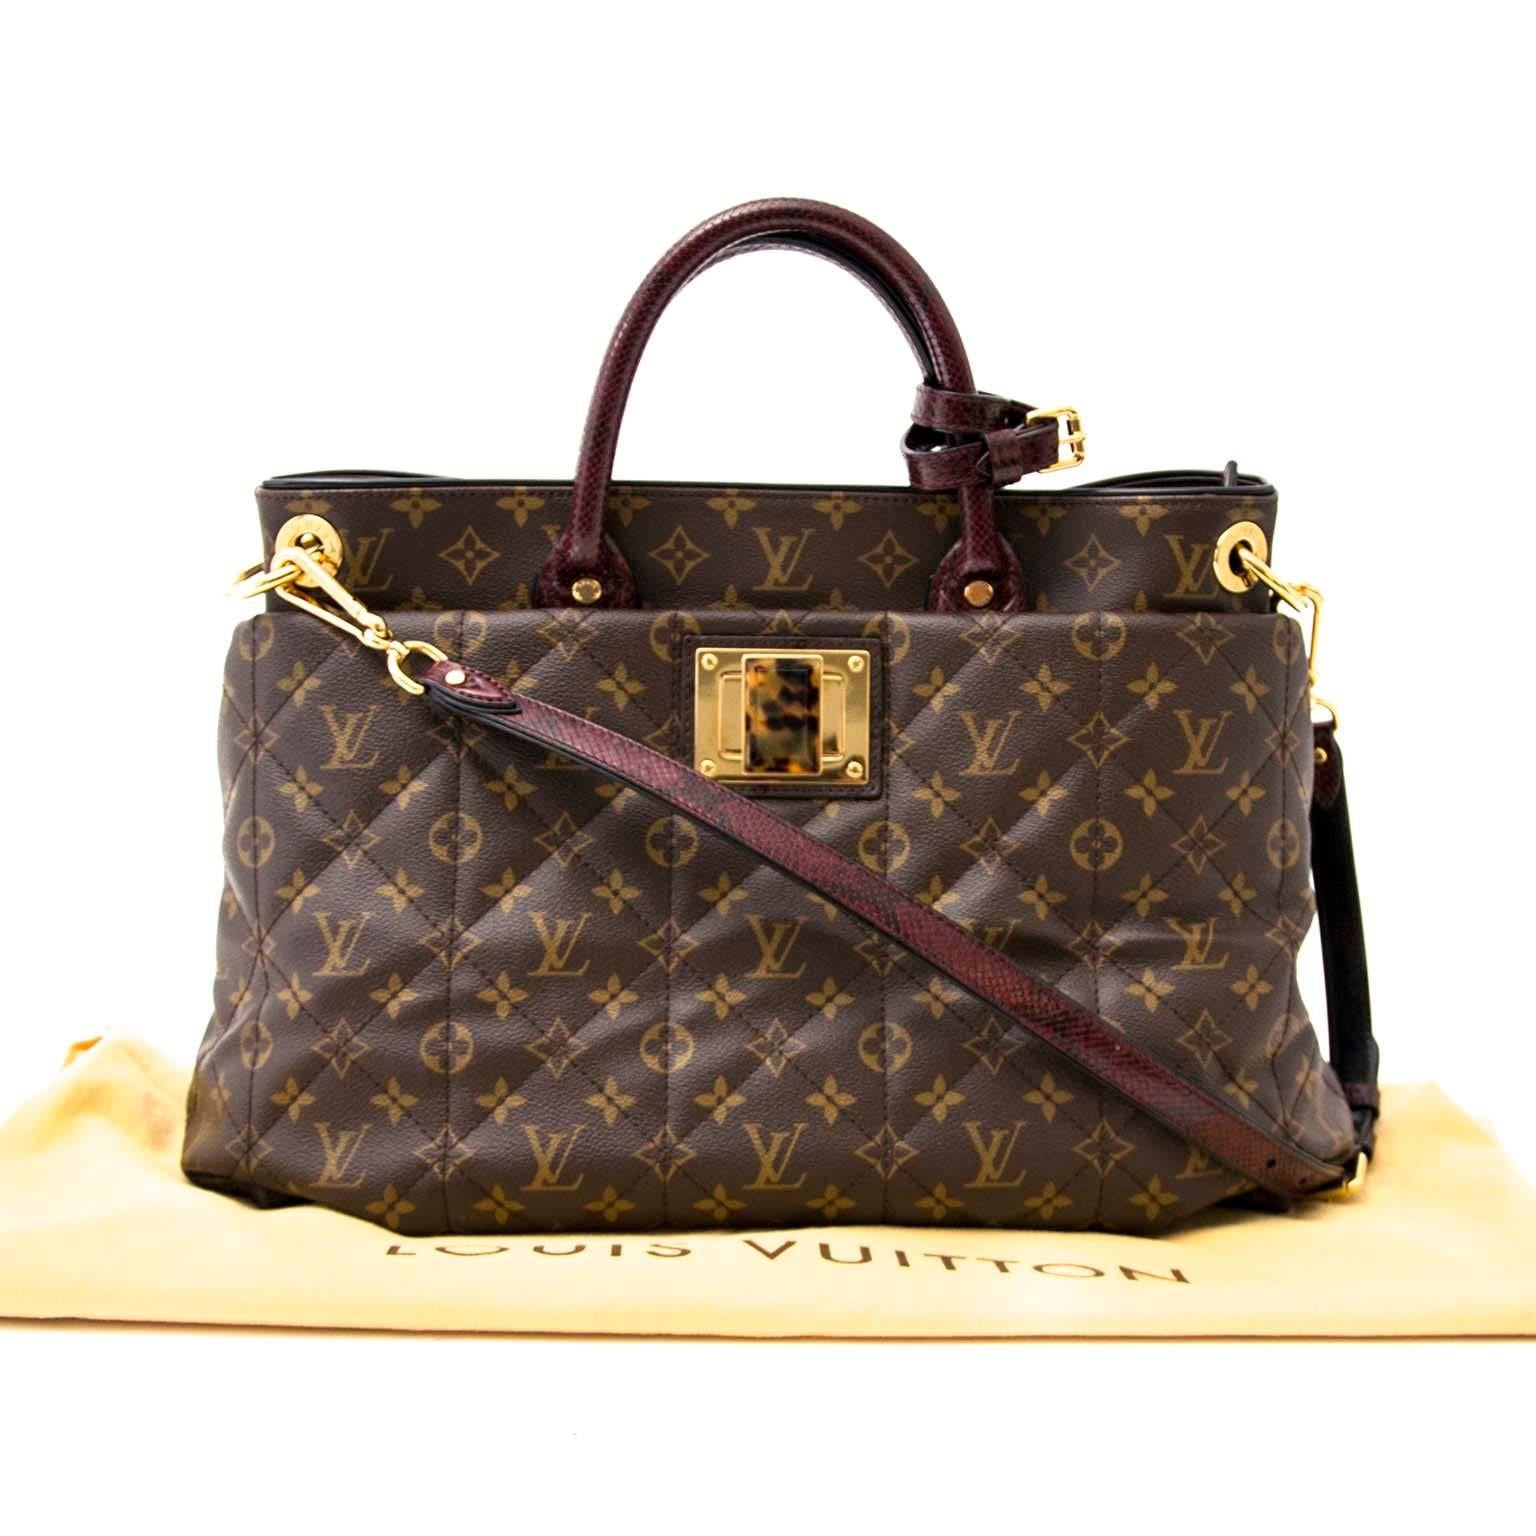 Pristine condition

EST RETAIL PRICE : € 5150

Louis Vuitton Monogram Etoile Exotique GM Tote Bag. 
